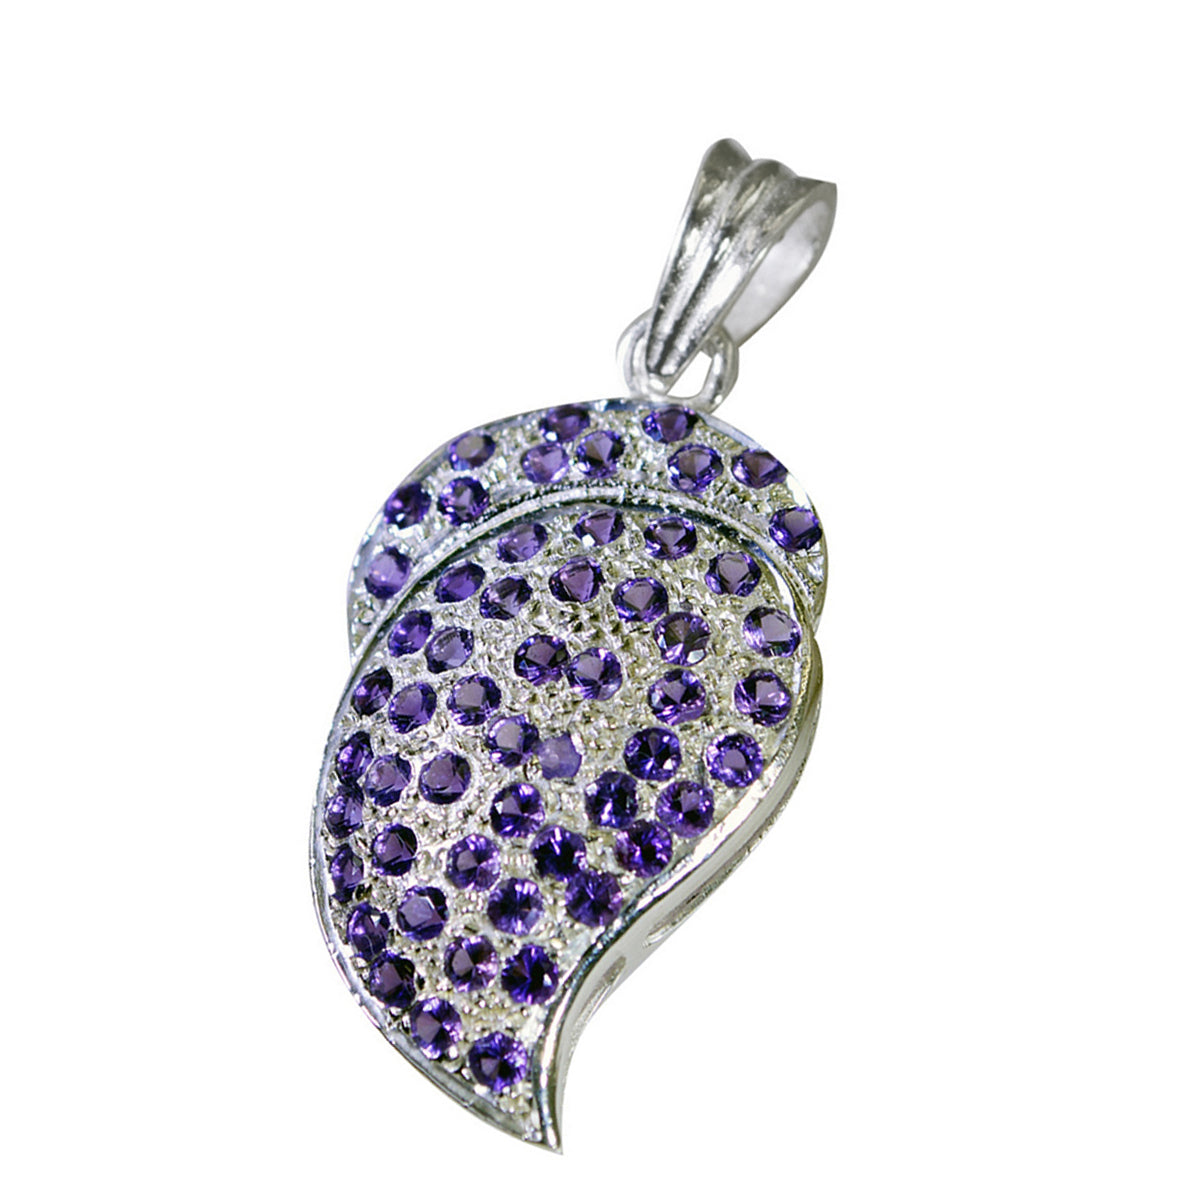 Riyo preciosas gemas redondas facetadas amatista púrpura colgante de plata maciza regalo para el Domingo de Pascua